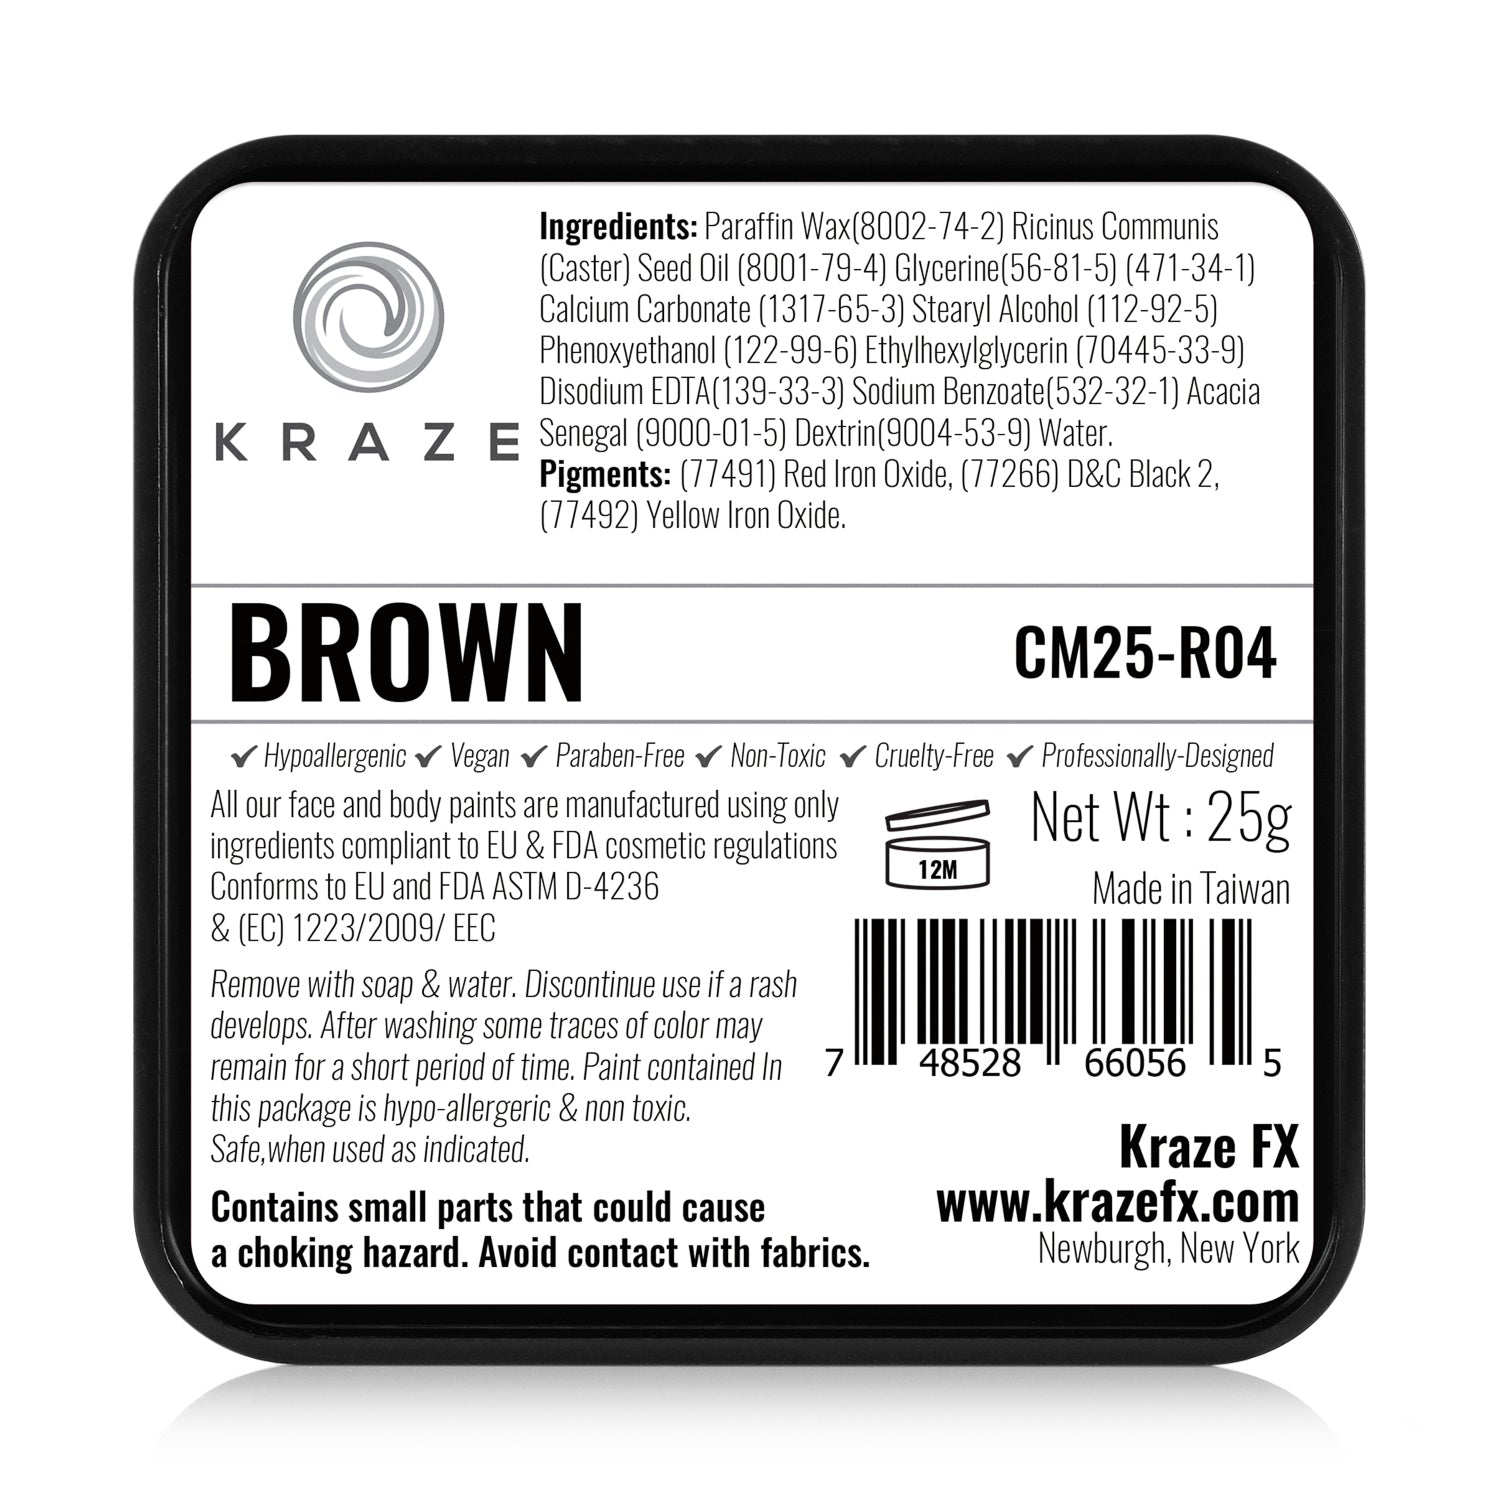 Kraze FX Face & Body Paint - Brown (25 gm)